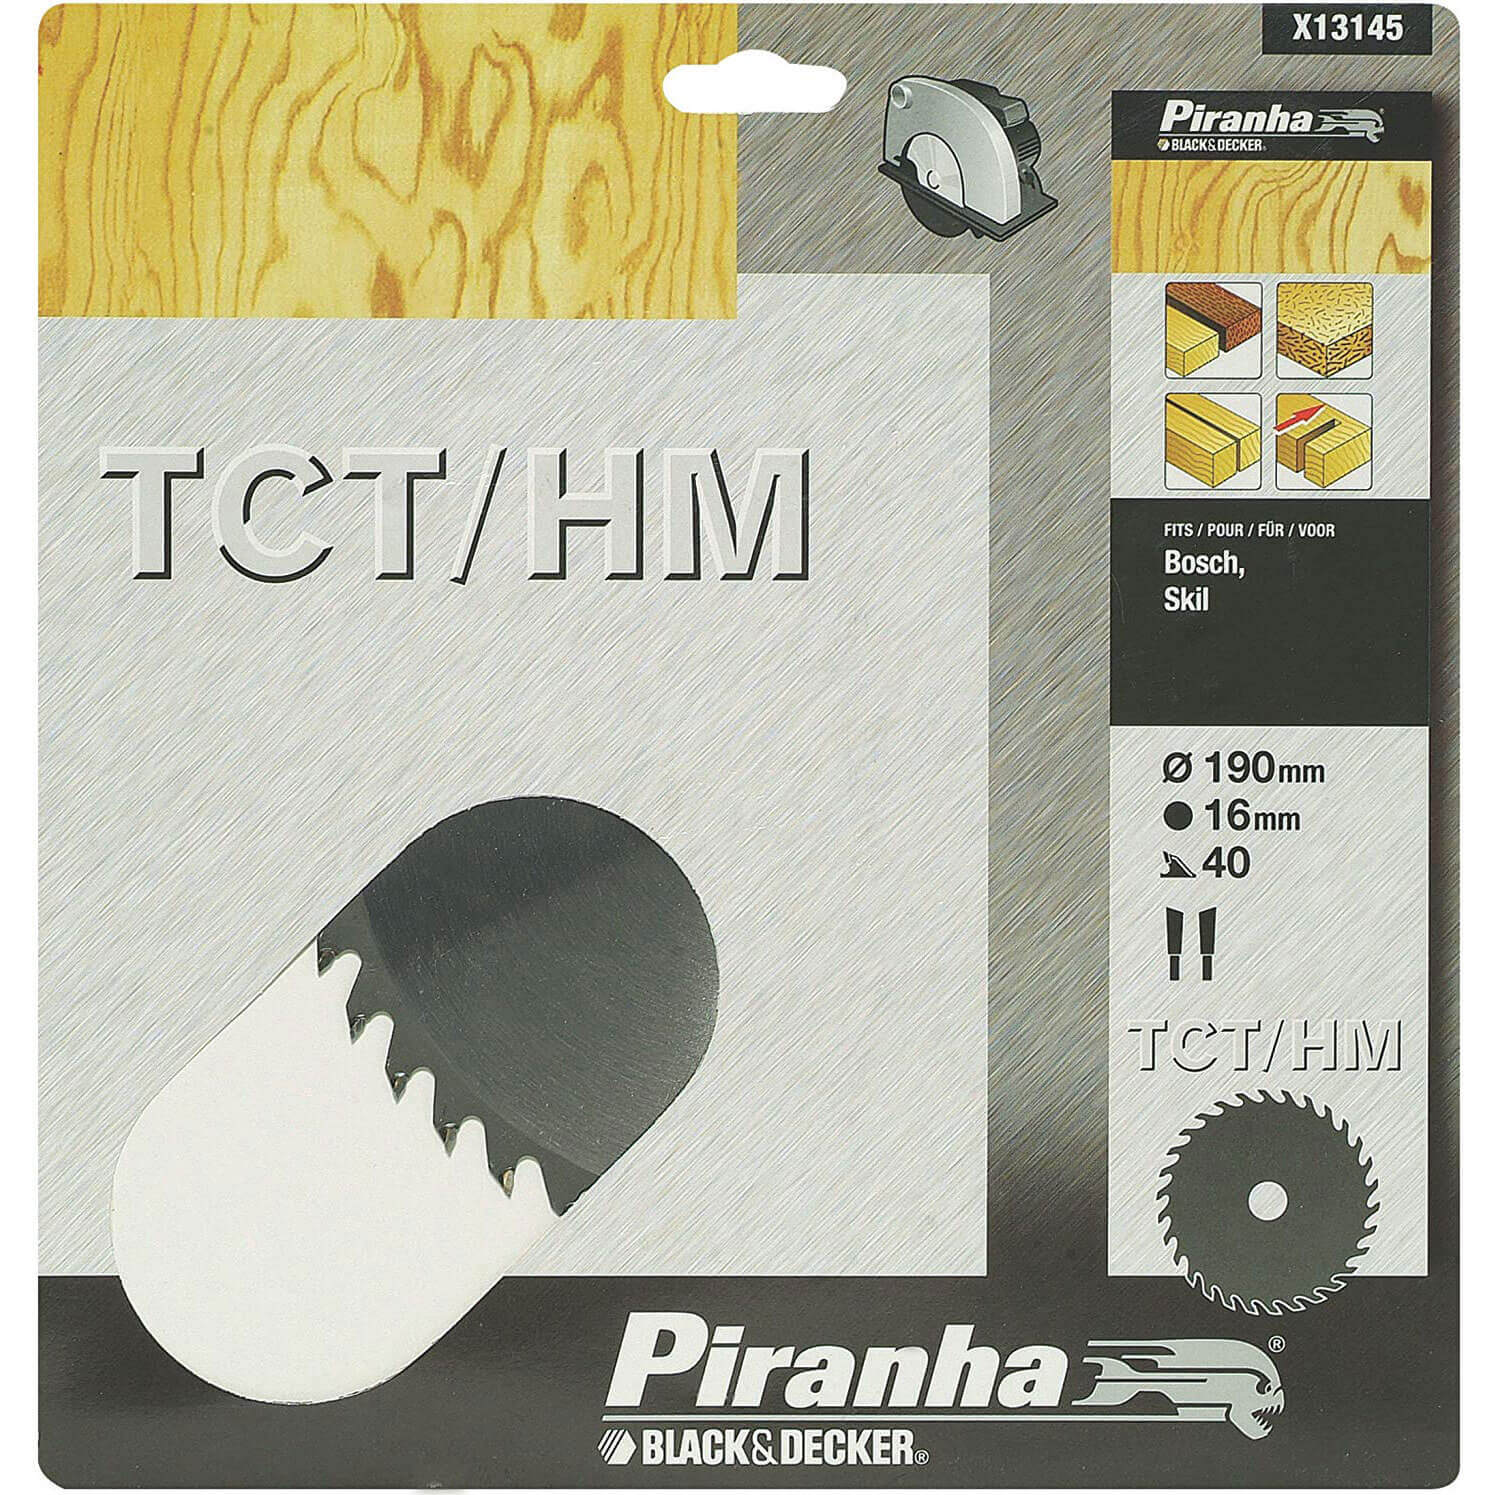 Image of Black and Decker Piranha TCT Fine Cross Cutting Circular Saw Blade 190mm 40T 16mm